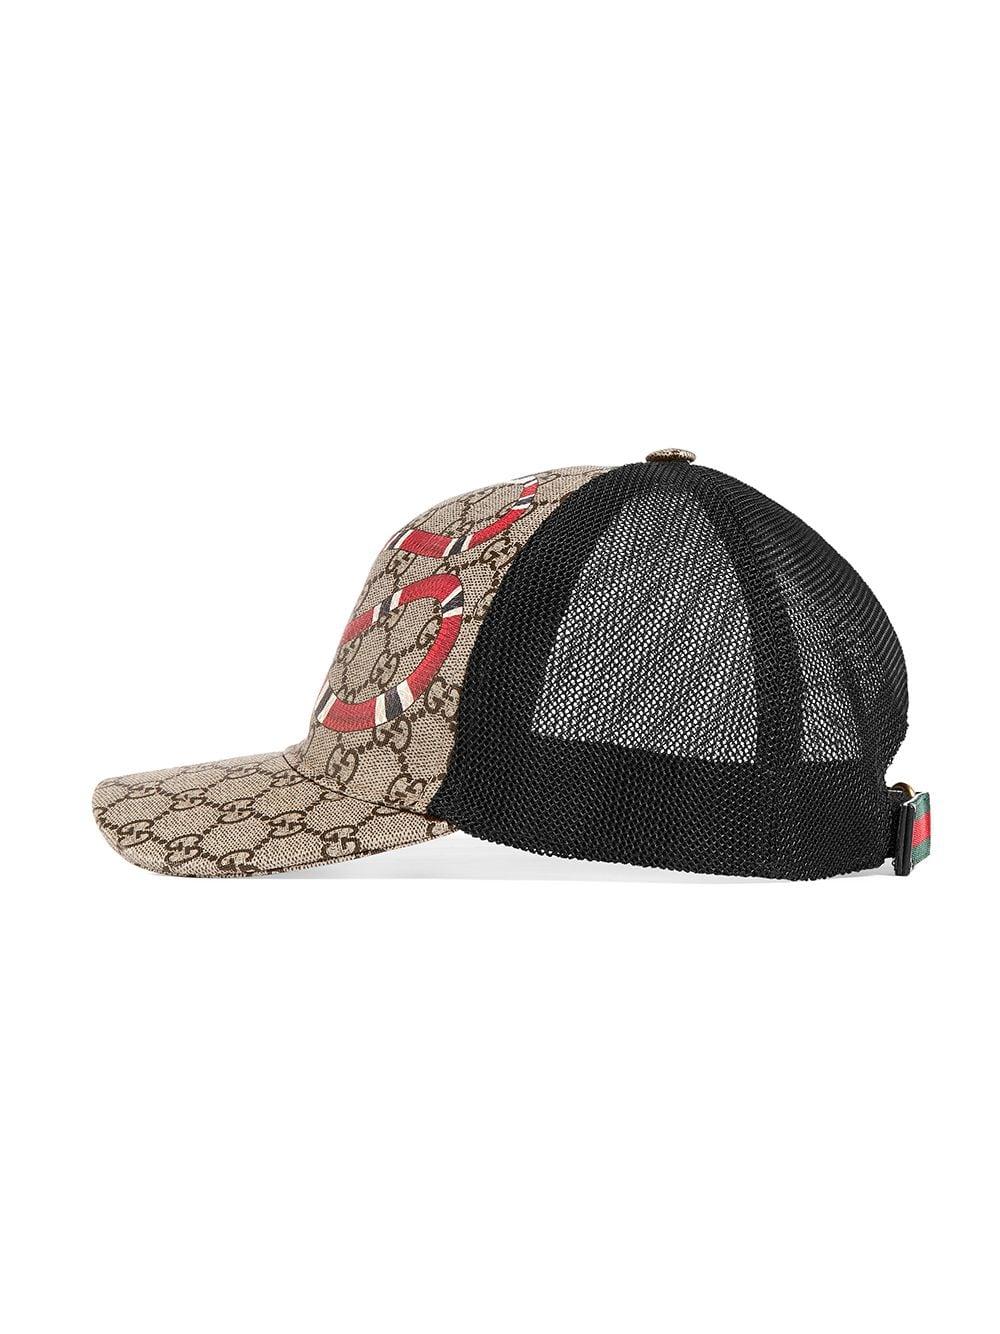 Gucci Canvas Kingsnake Print GG Supreme Baseball Hat for Men - Save 40% -  Lyst